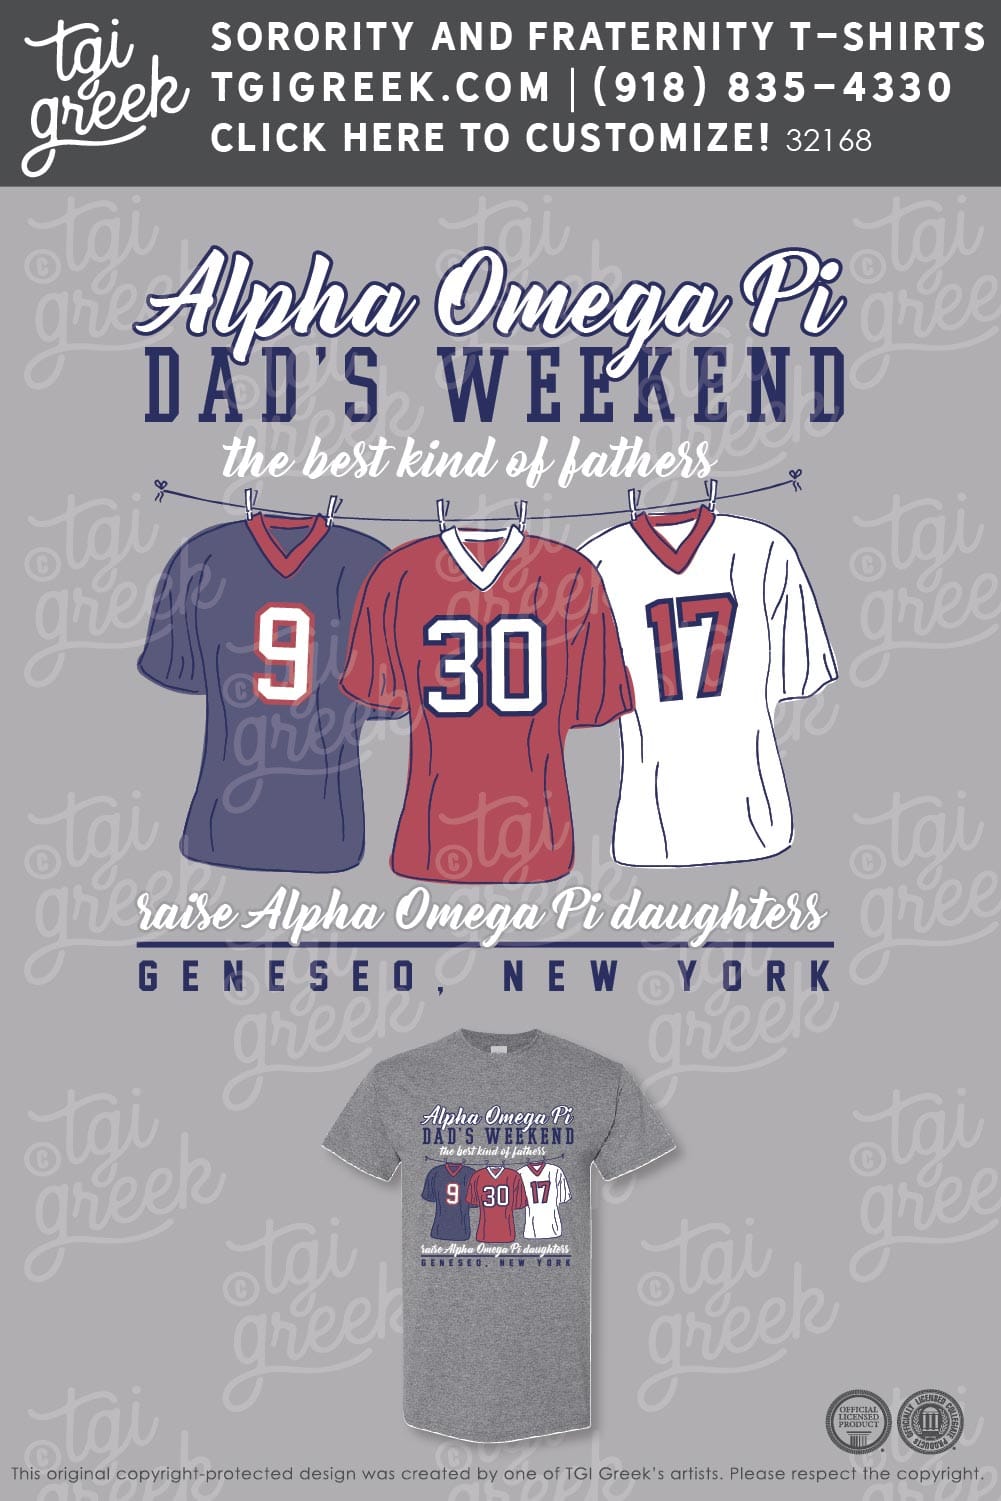 Alpha Omega Pi - SUNYG - Dads Weekend - TGI Greek